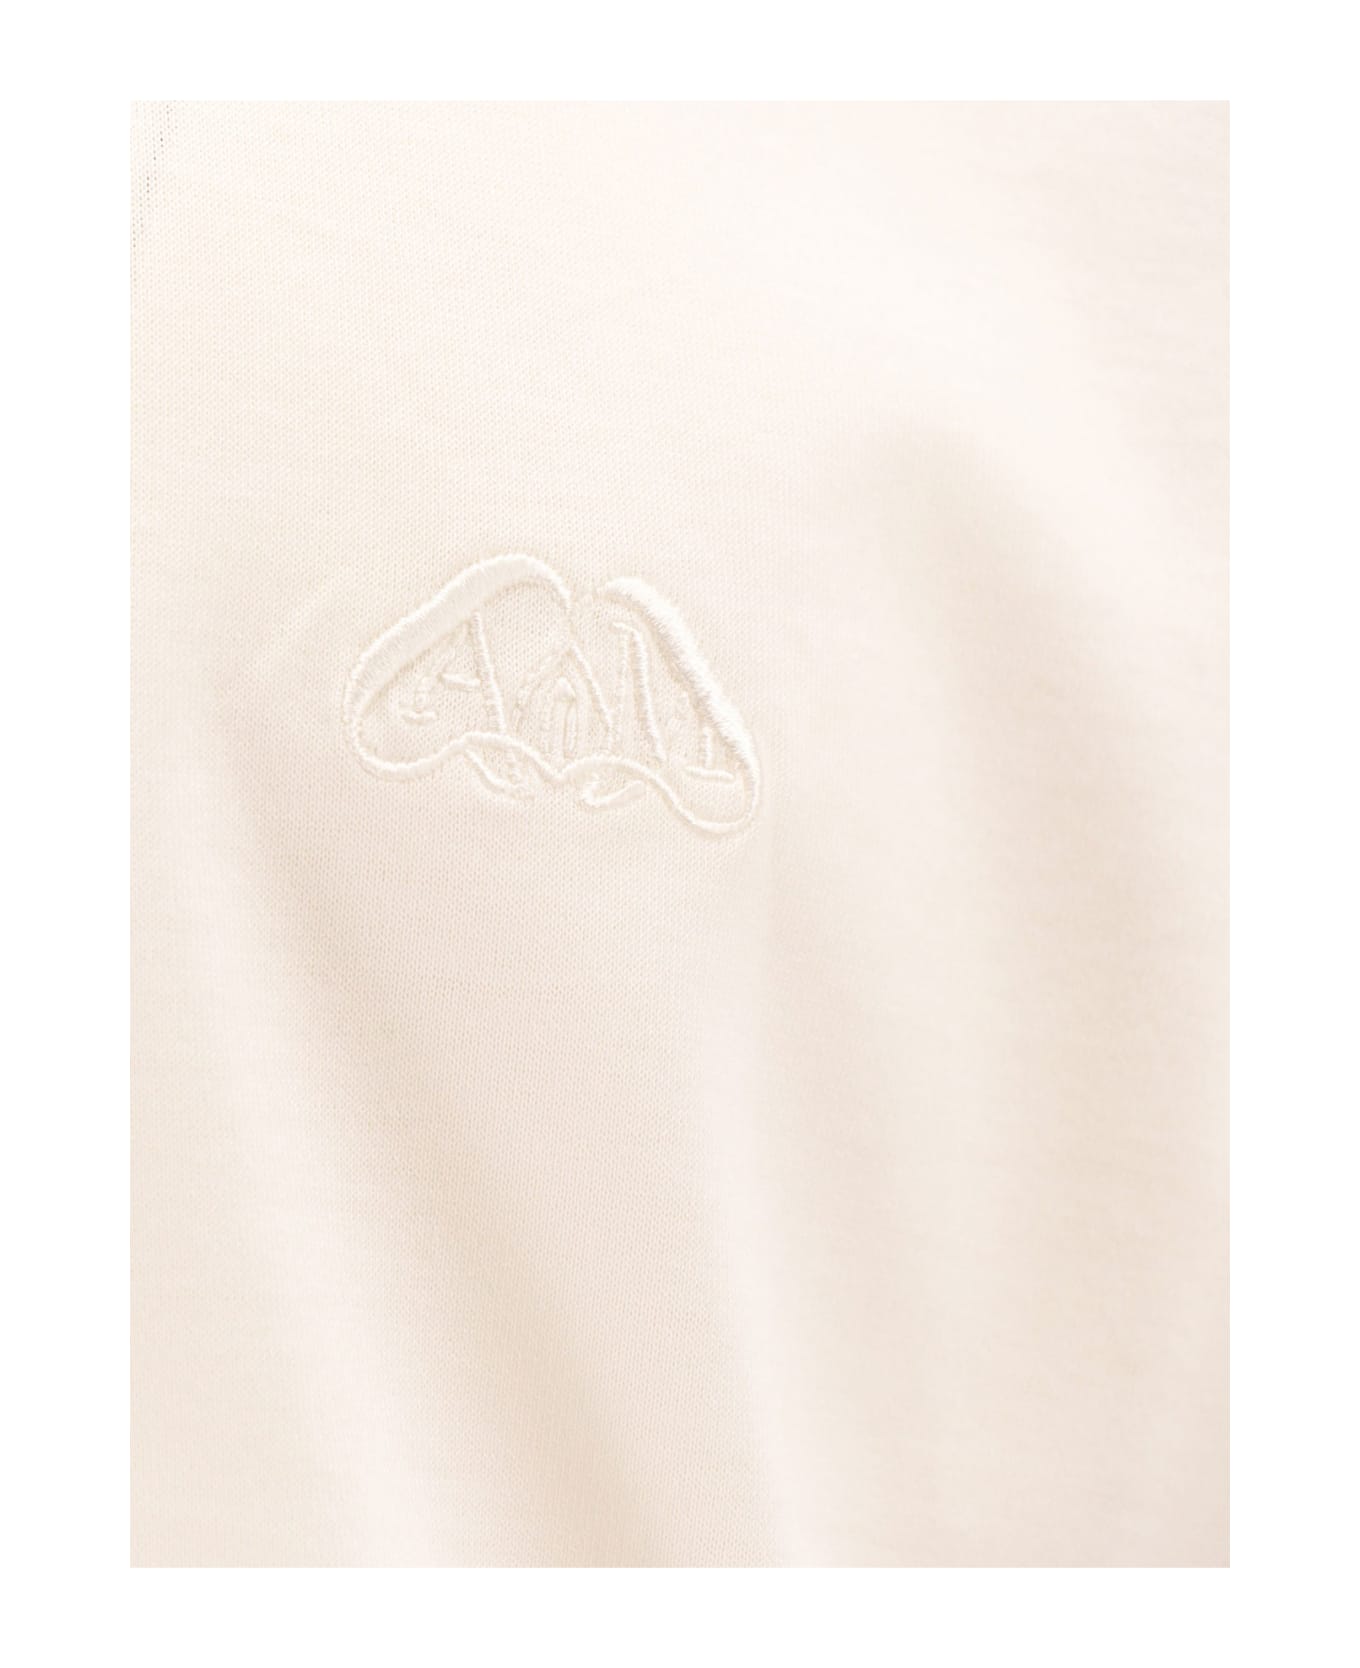 Alexander McQueen Polo Shirt - White ポロシャツ